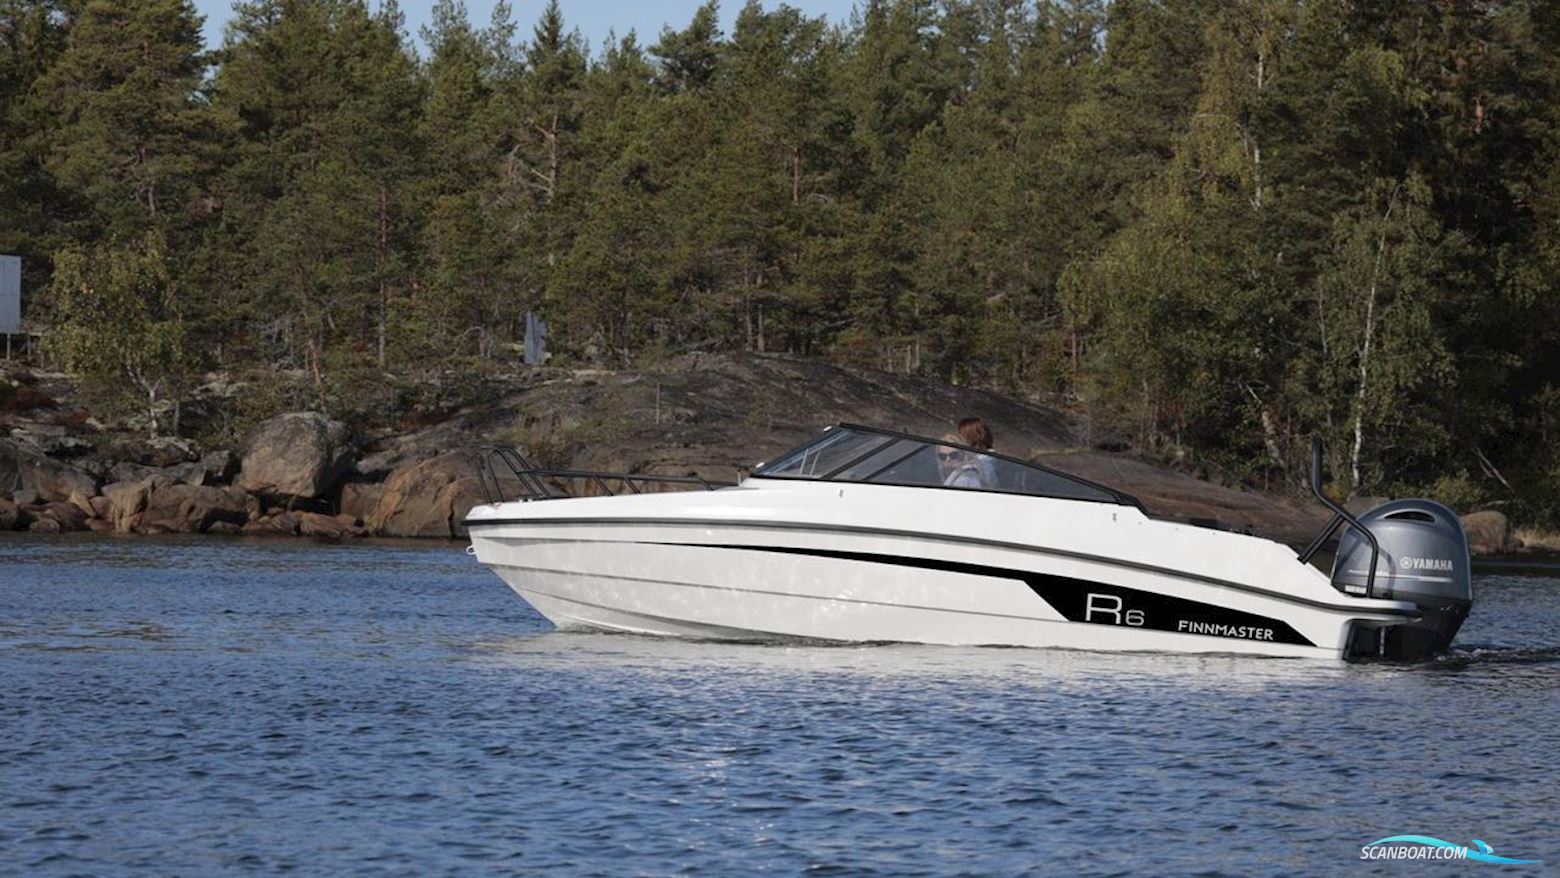 Finnmaster R6 Motor boat 2023, with Yamaha engine, Sweden